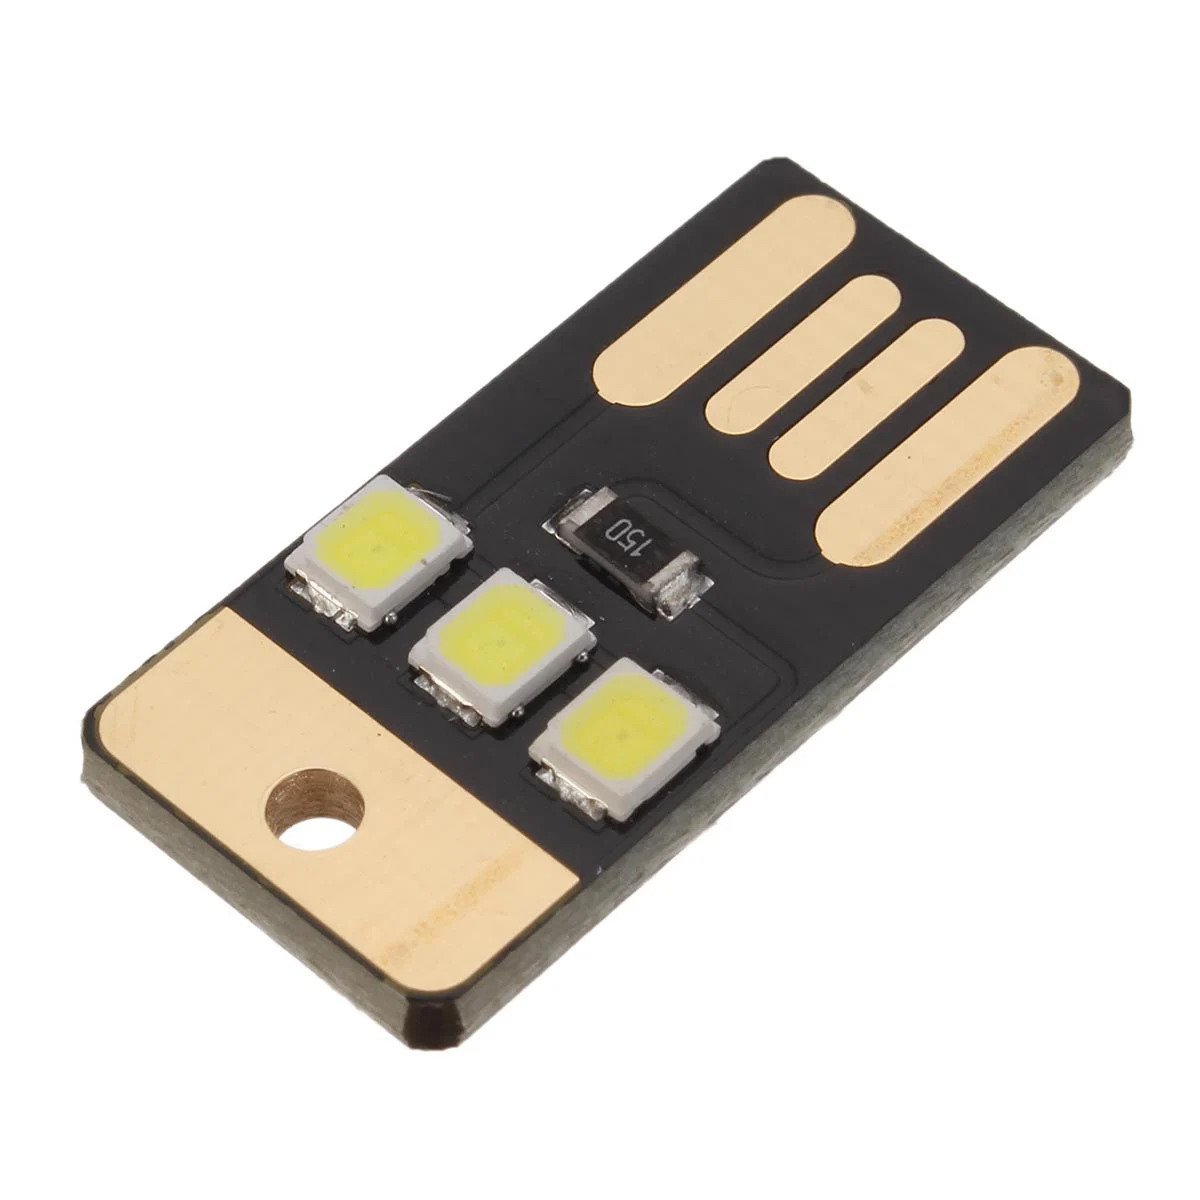 AVAILABLE ON ZBOTIC

Mini Ultra Slim USB LED Light

ORDER NOW -
zbotic.in/product/mini-u…
#USB #ultrausb #miniusb #slimusb #LED #ledlights  #USBPort #electronica #electronicsstore #zbotic